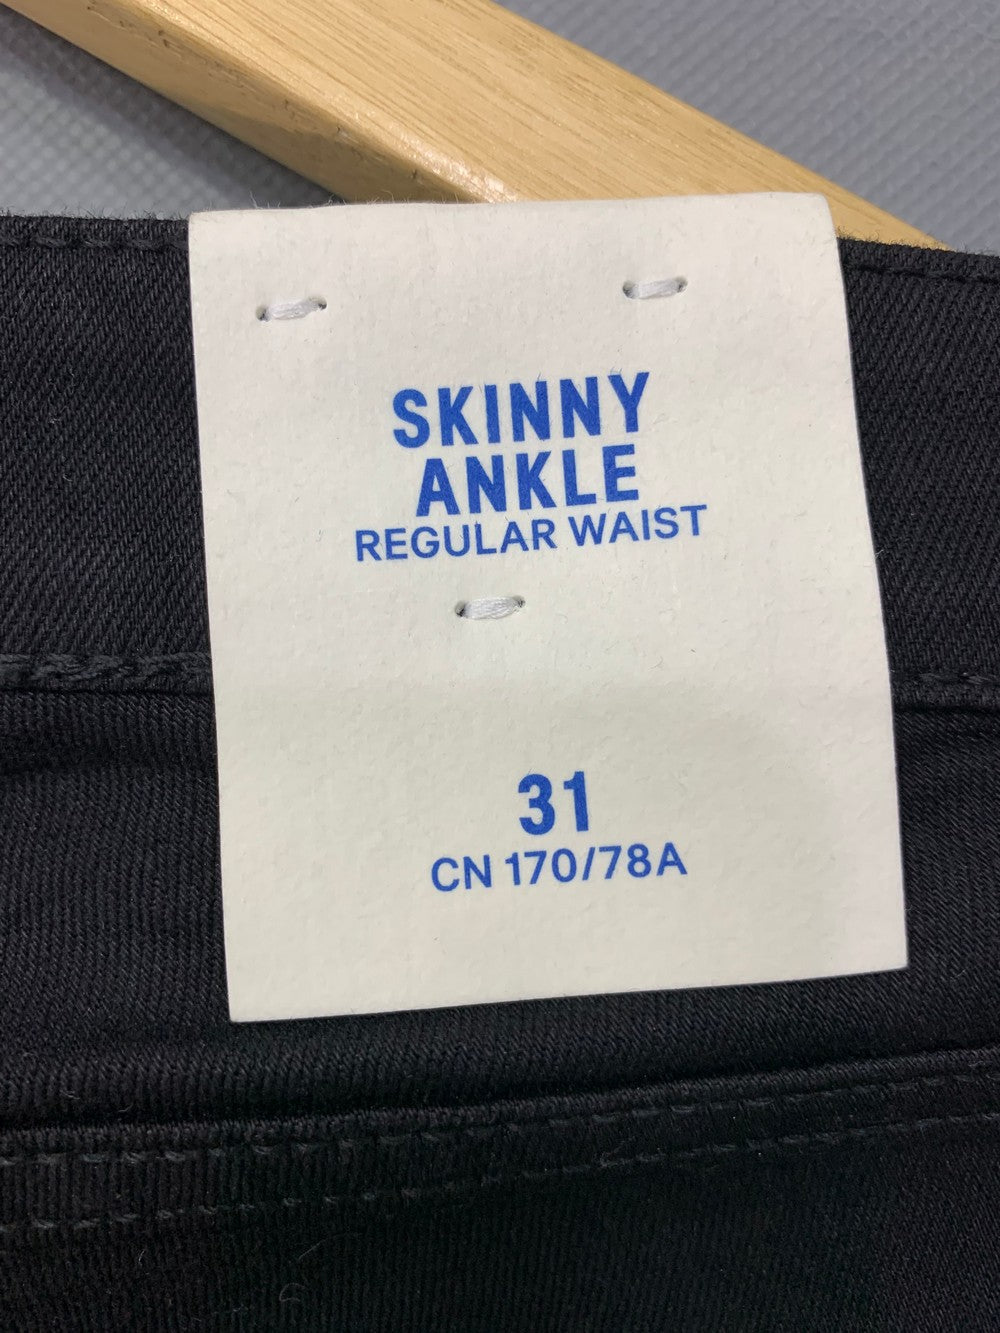 Skinny Ankle Branded Original Jeans For Women Pant